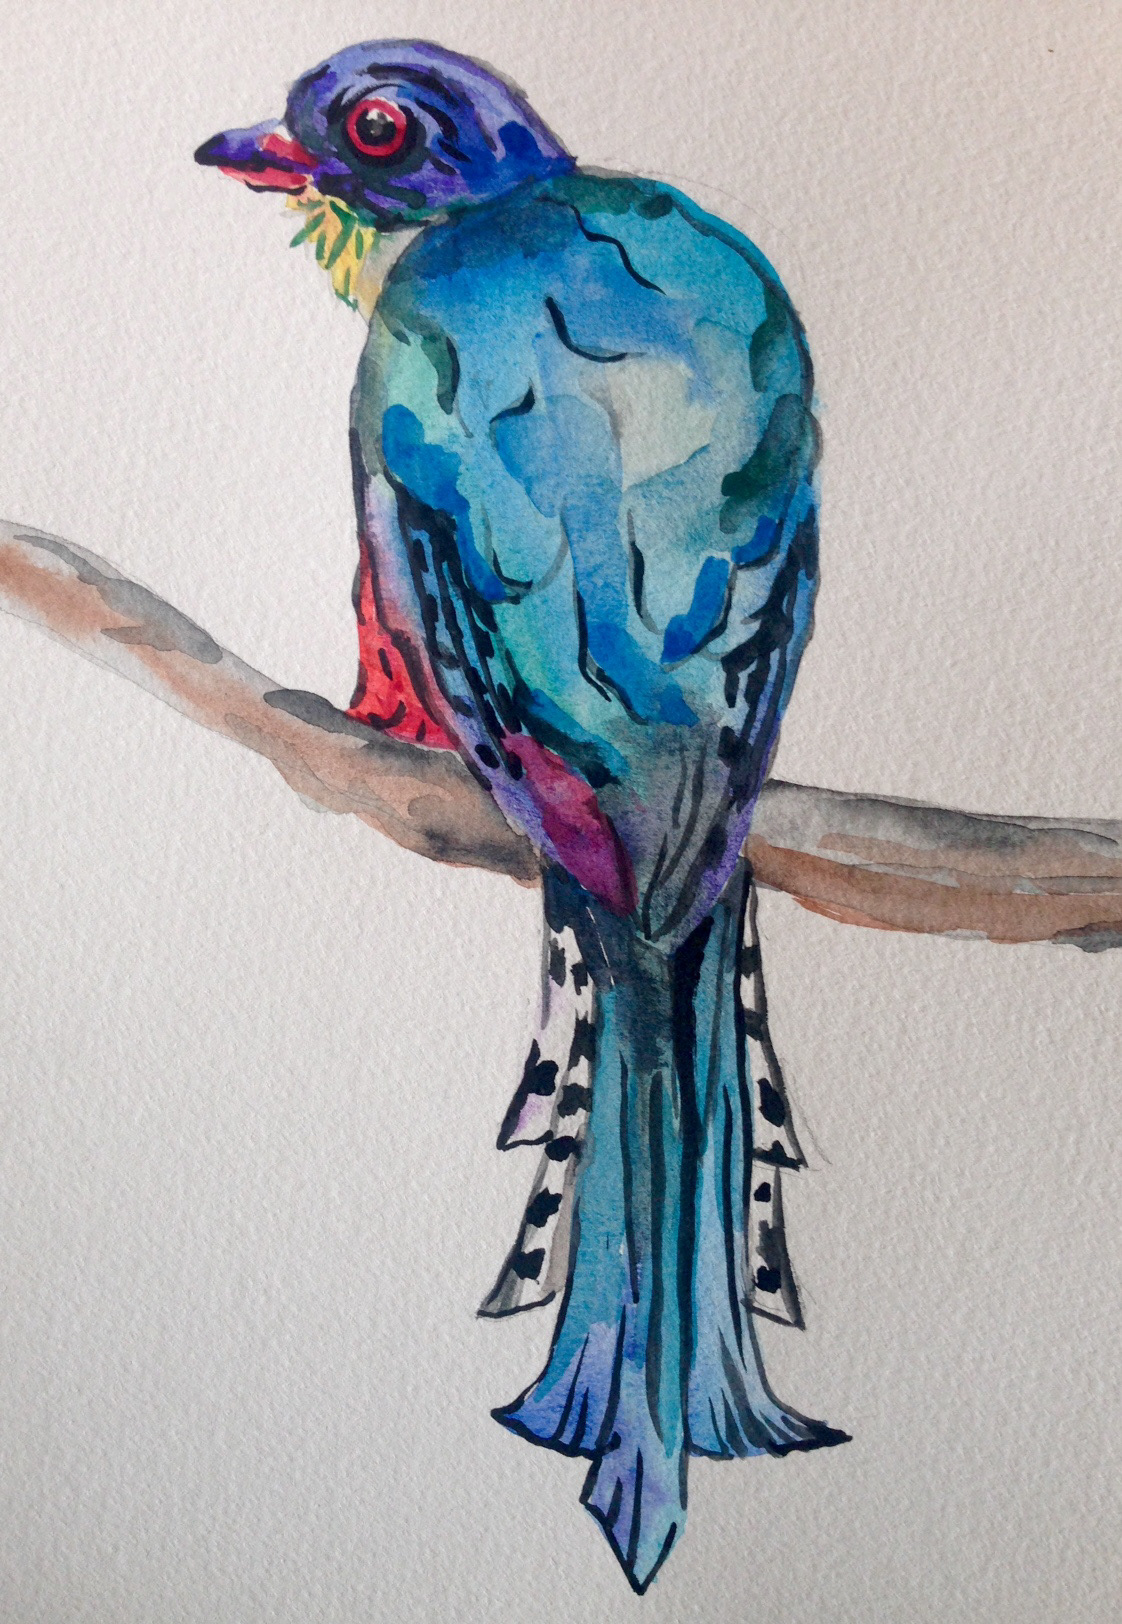 birds cuba textile Nature colorful watercolor pattern jungle Tropical